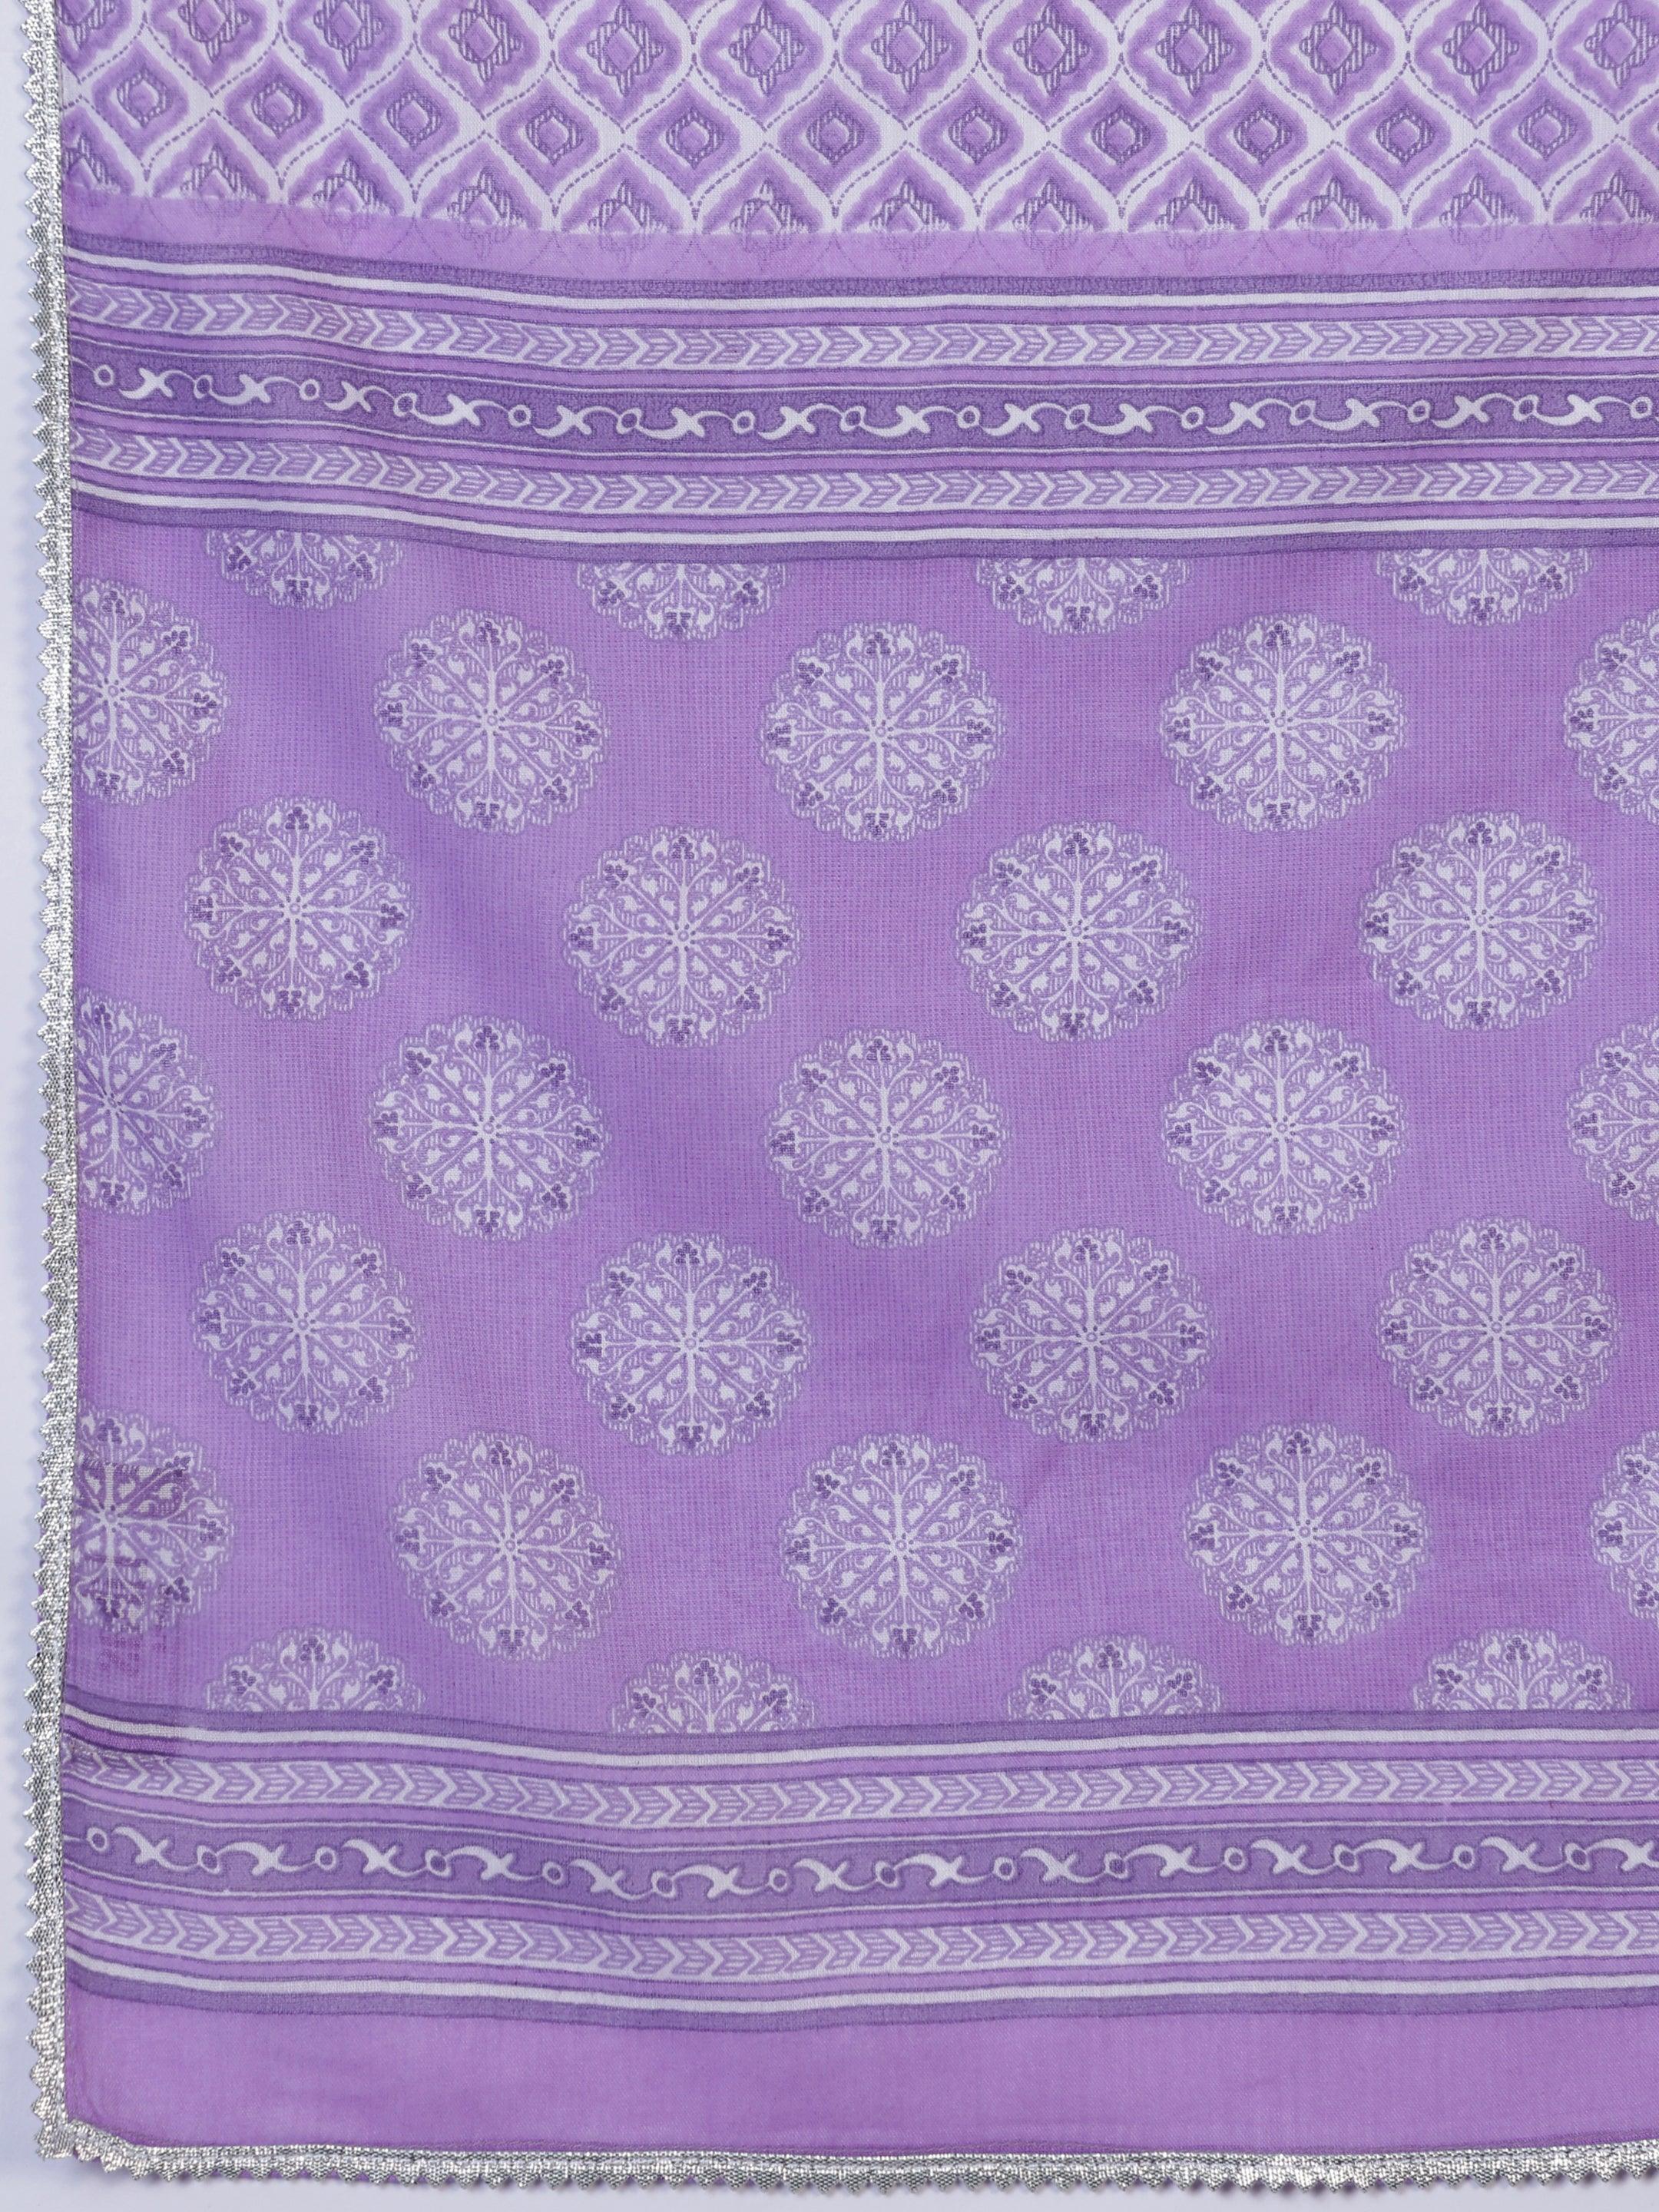 Purple Printed Cotton A-Line Kurta With Trousers & Dupatta